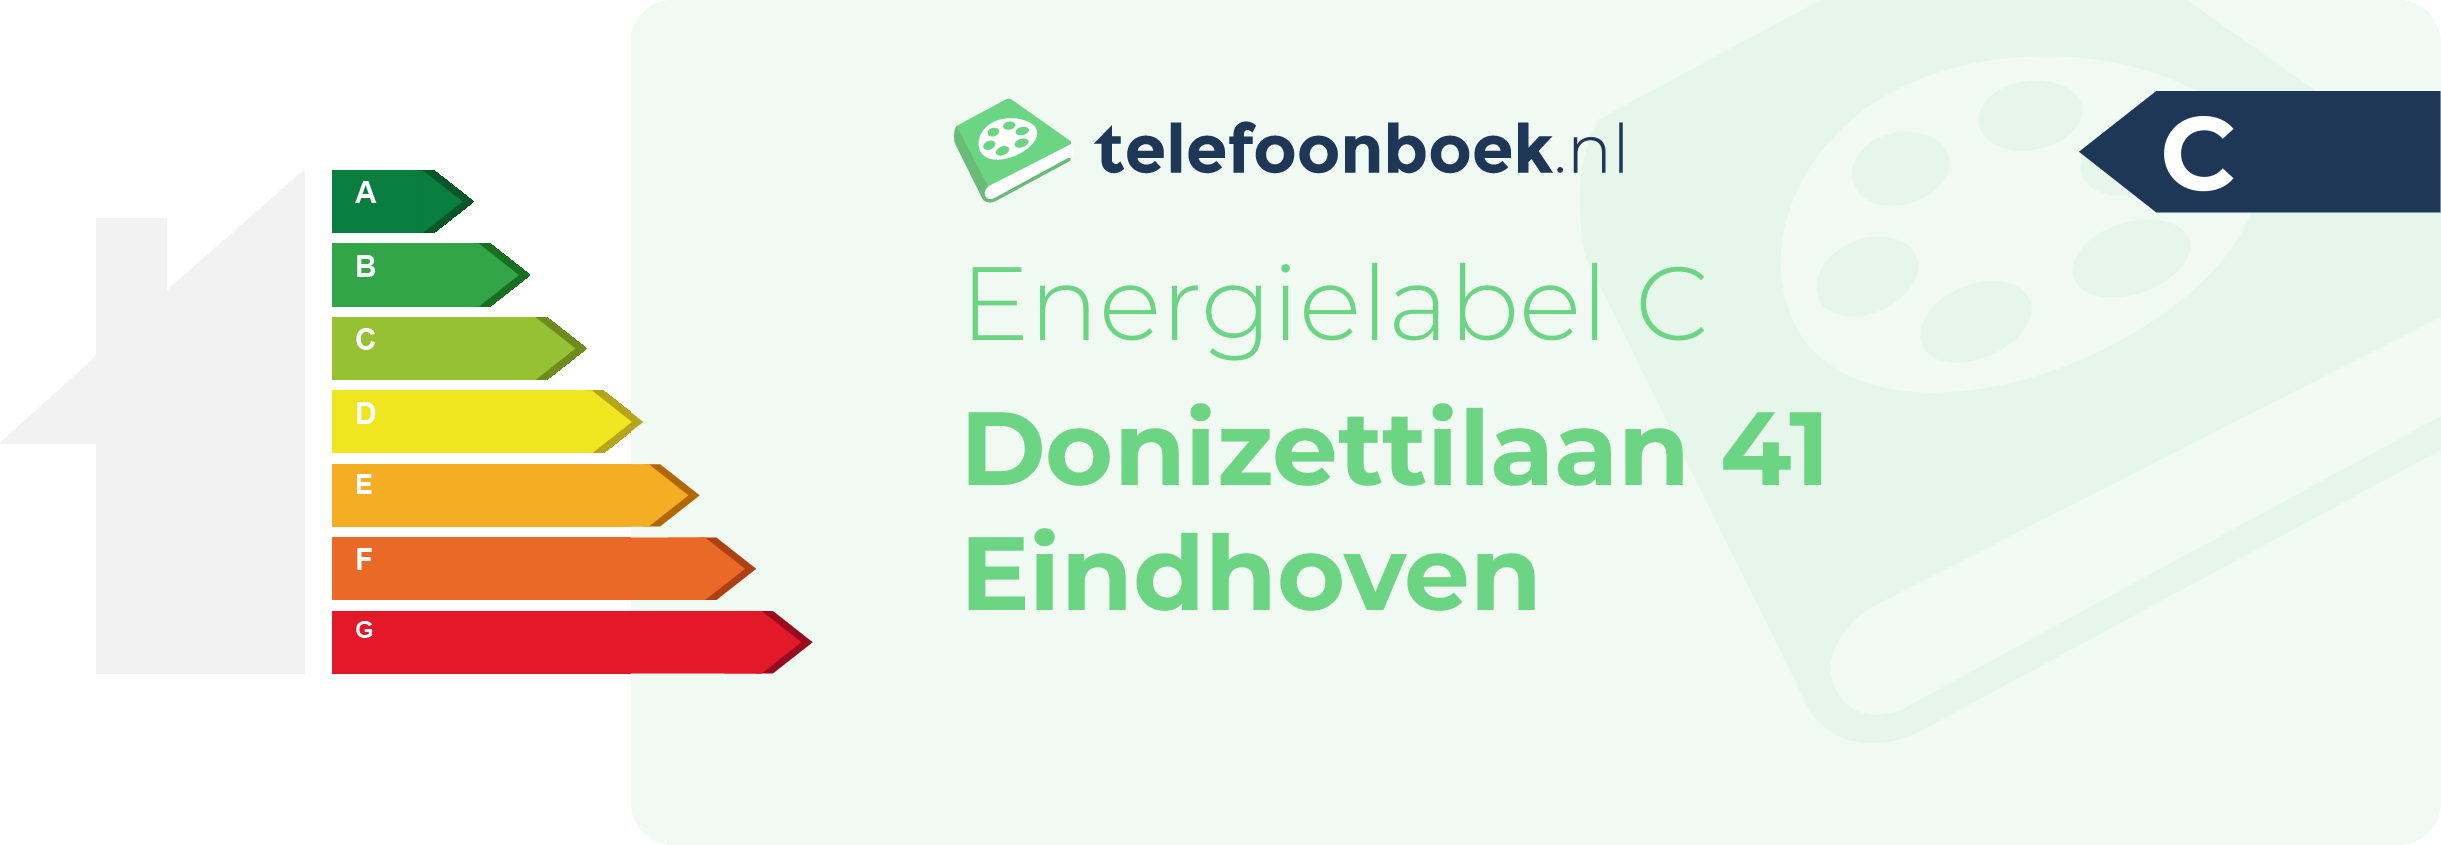 Energielabel Donizettilaan 41 Eindhoven